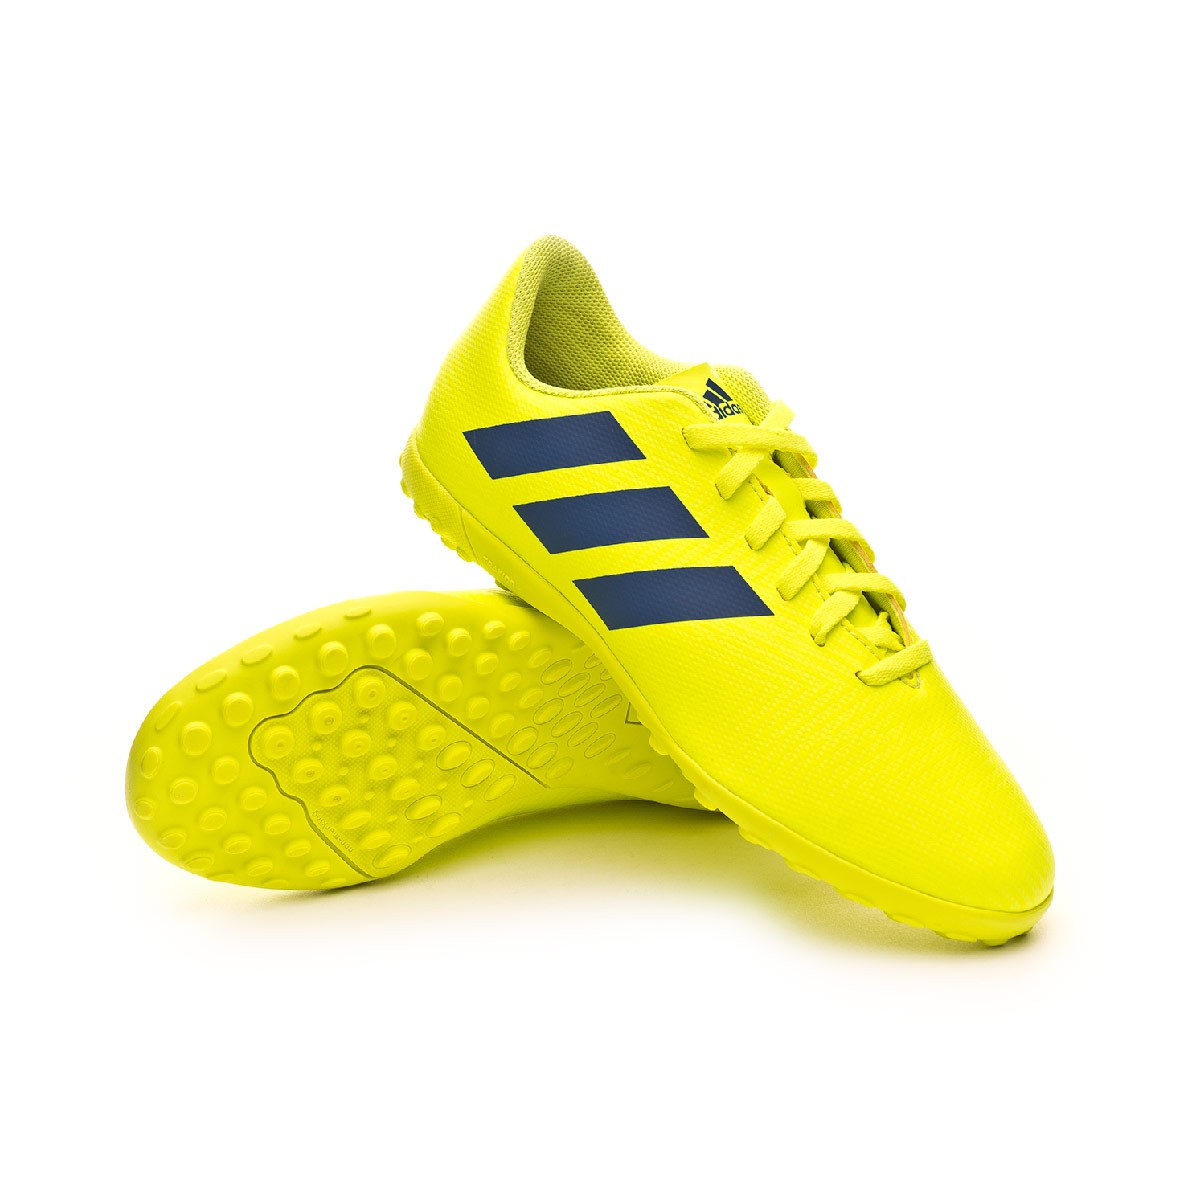 Football Boot adidas Nemeziz 18.4 Turf Niño Solar yellow-Football  blue-Active red - Football store Fútbol Emotion